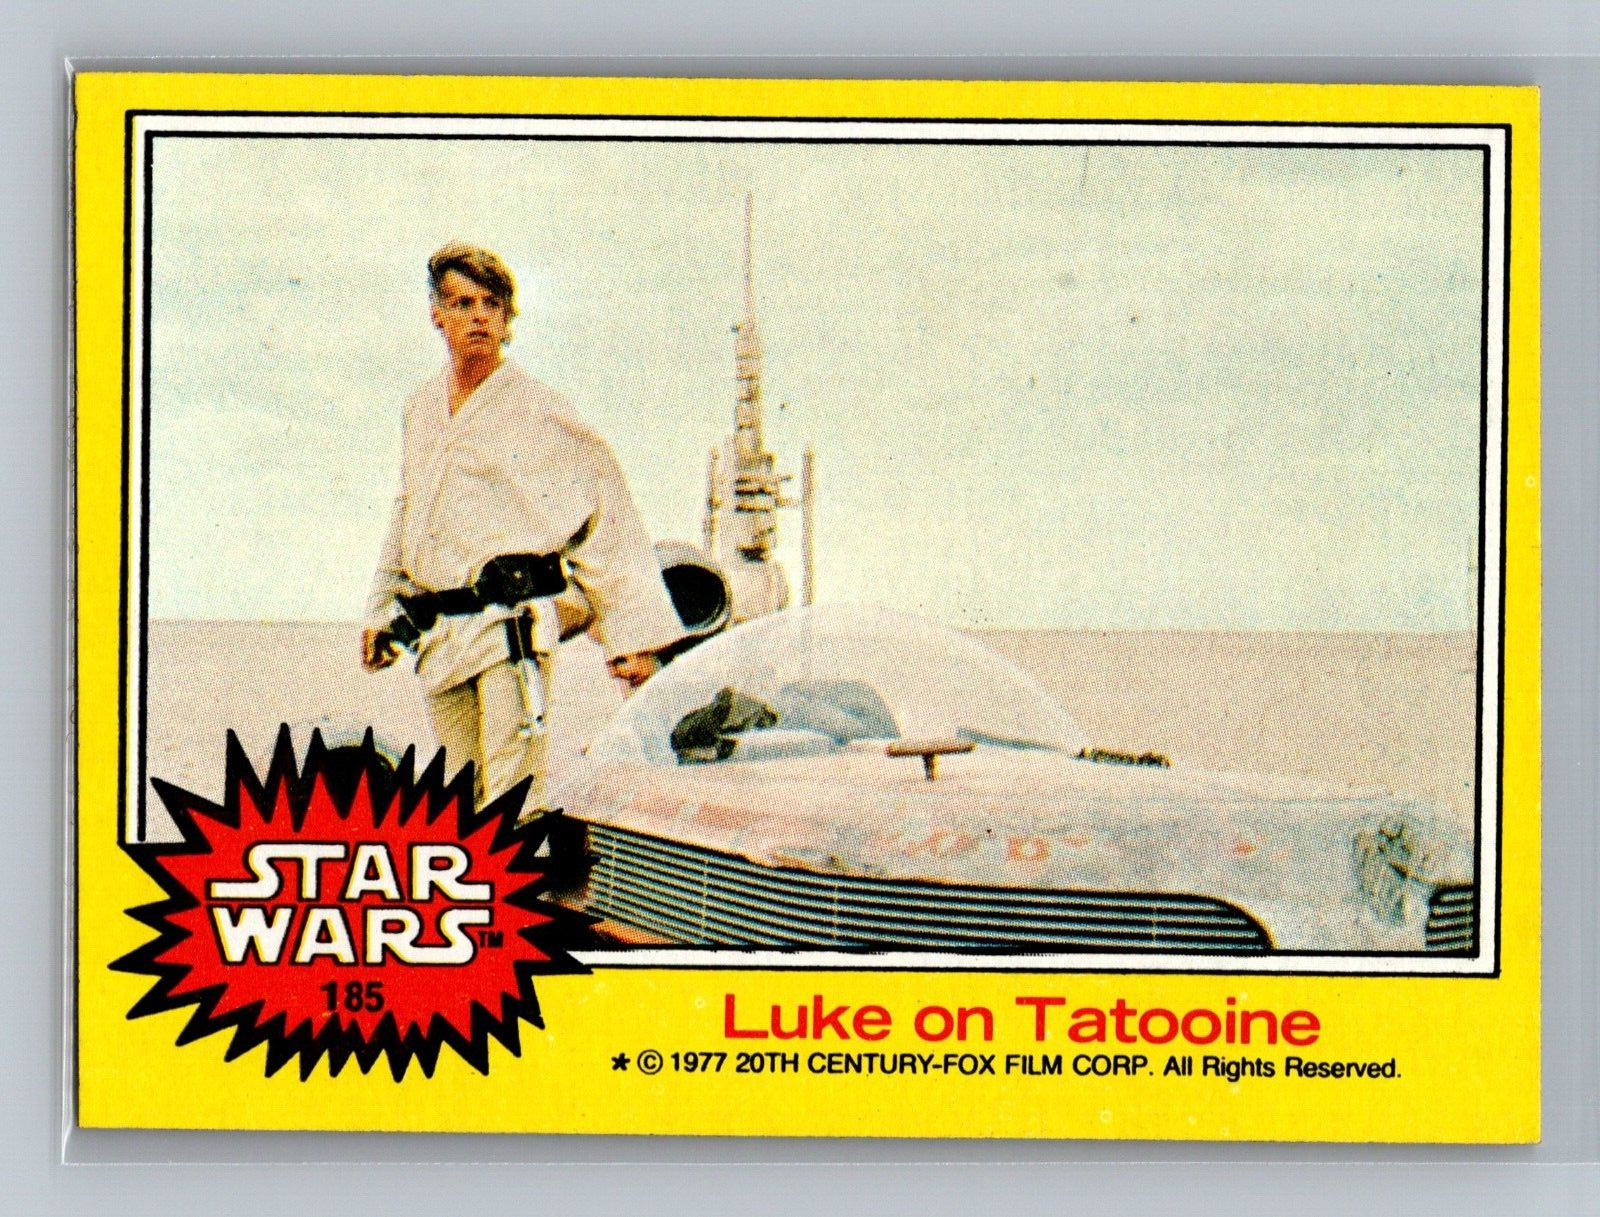 1977 Topps Star Wars Luke on Tatooine #185 - NEAR MINT to MINT